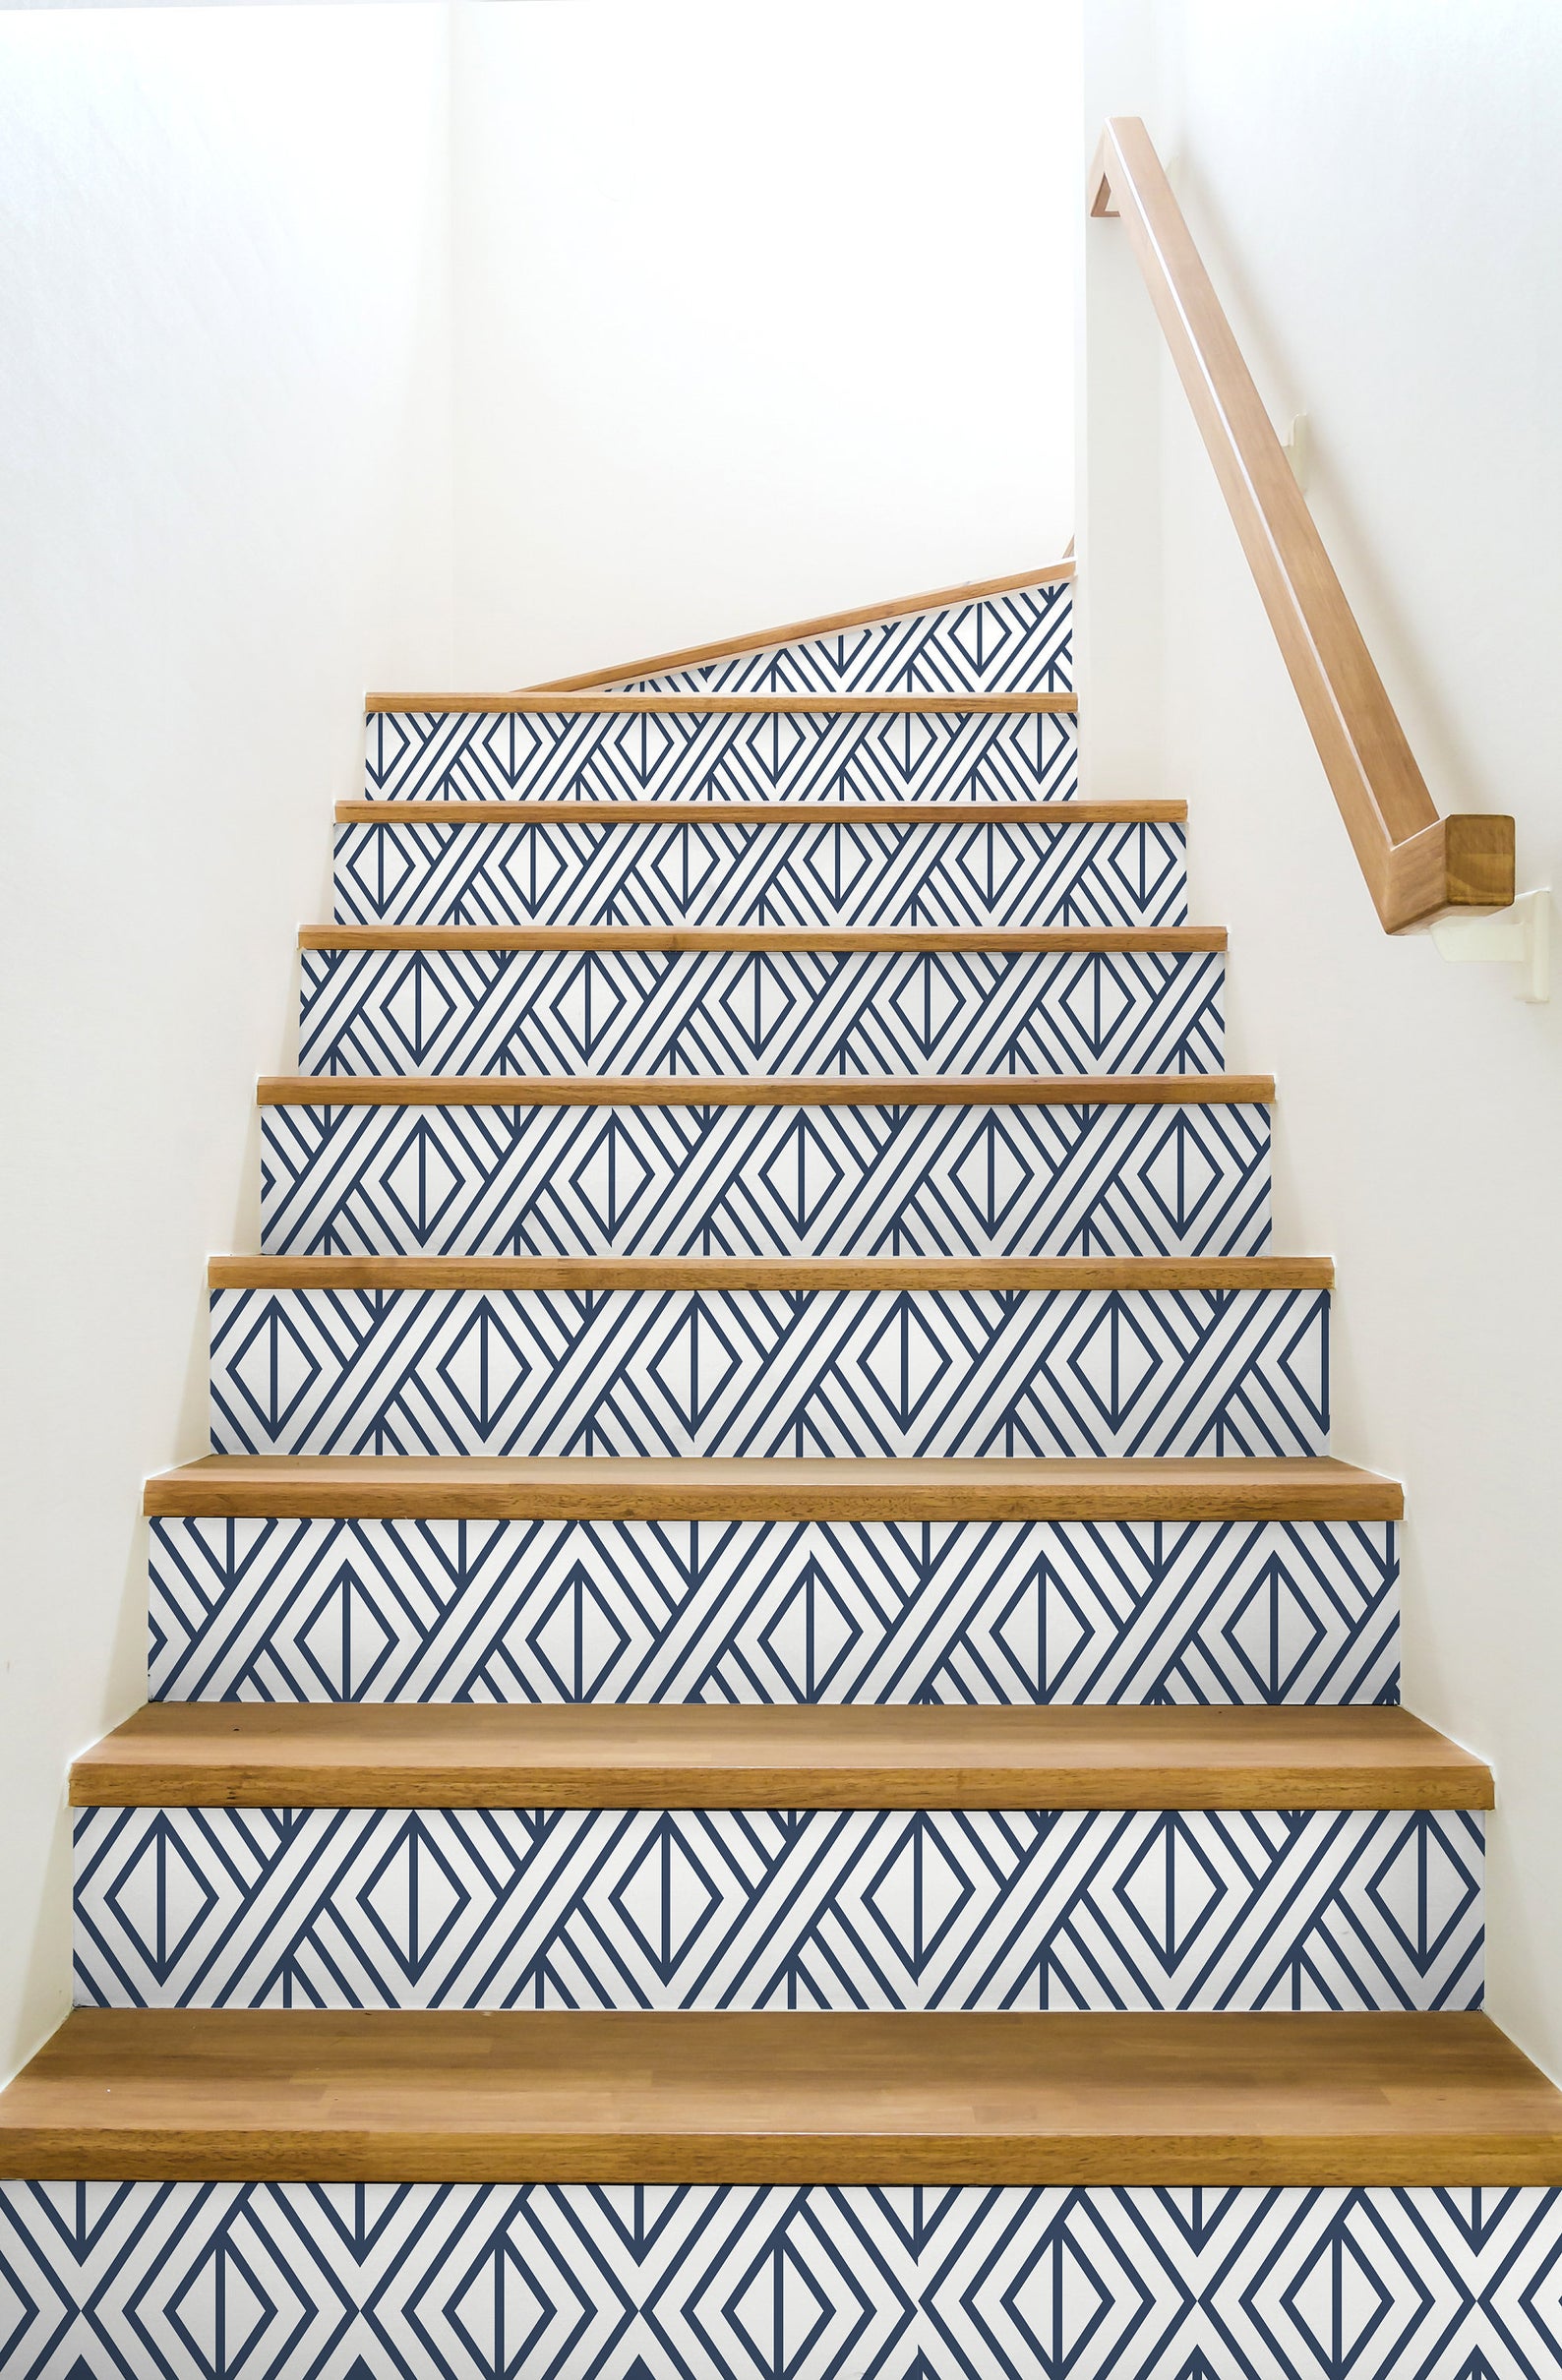 Make Decorative Stair Risers Using Wallpaper  At Charlottes House